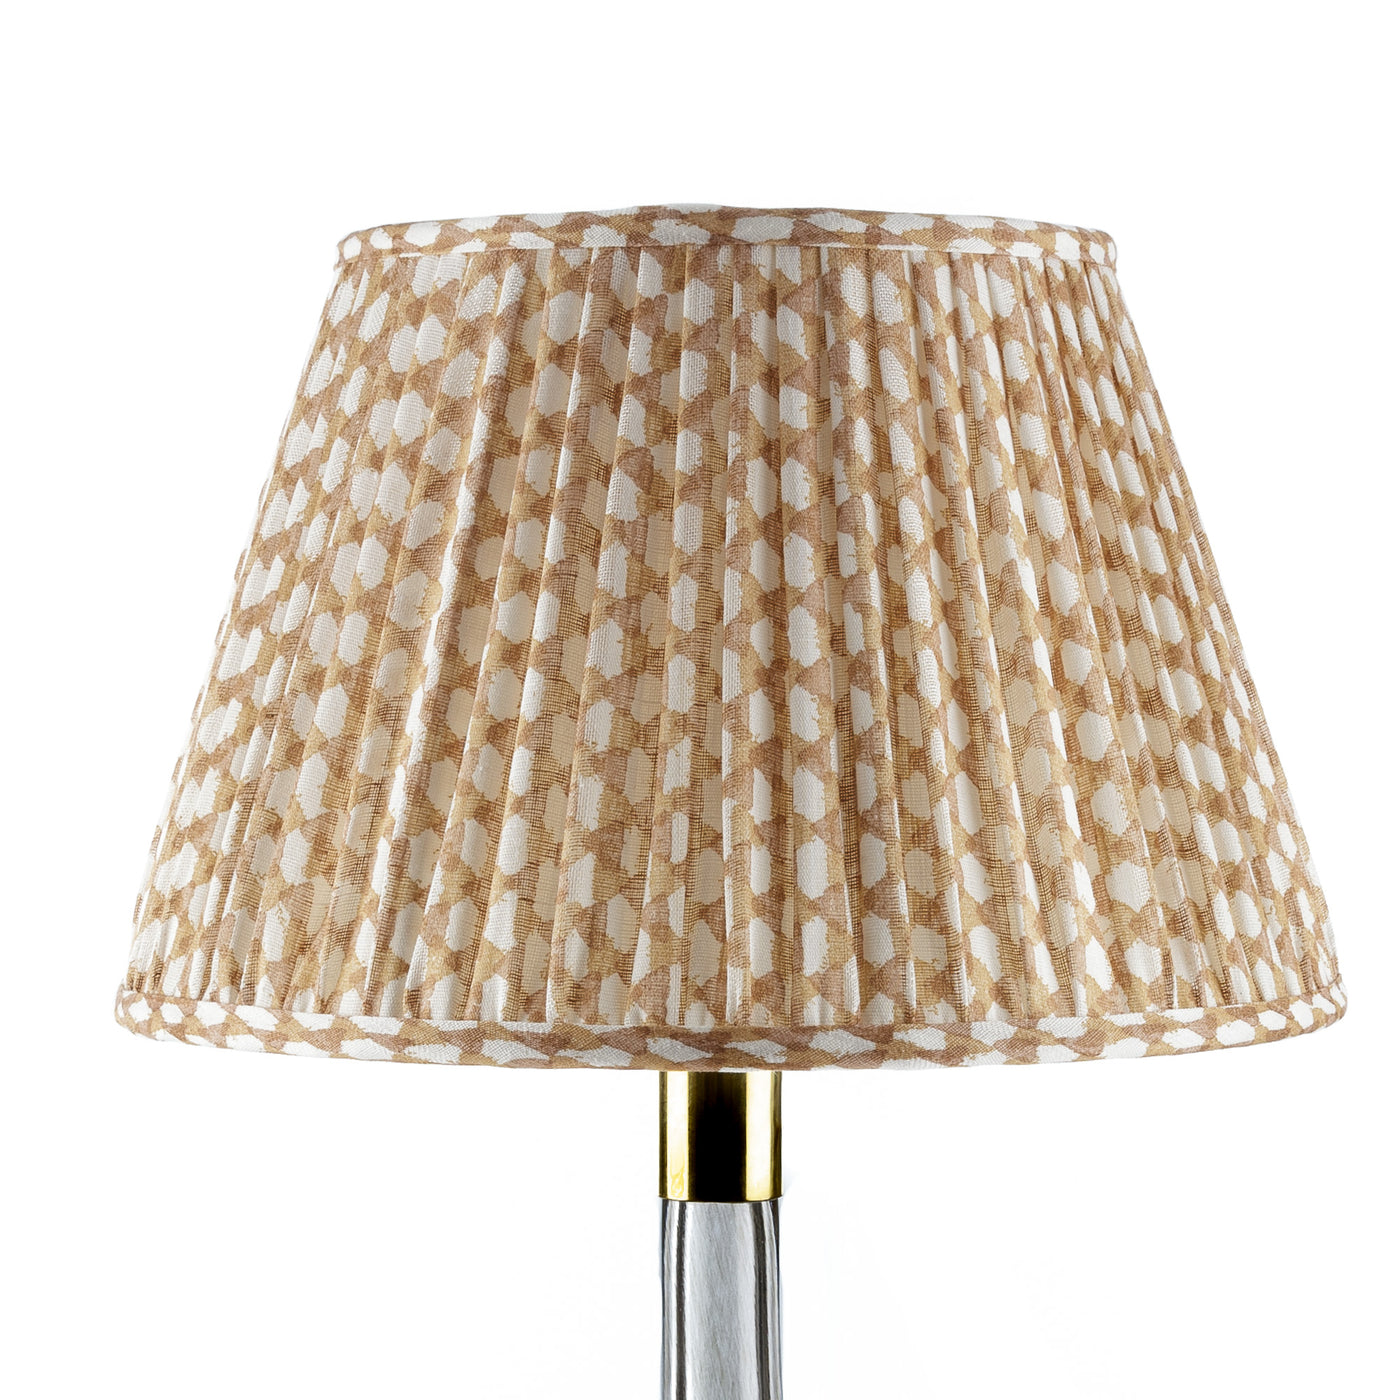 18" Fermoie Lampshade - Wicker in Nut Brown | Newport Lamp And Shade | Located in Newport, RI